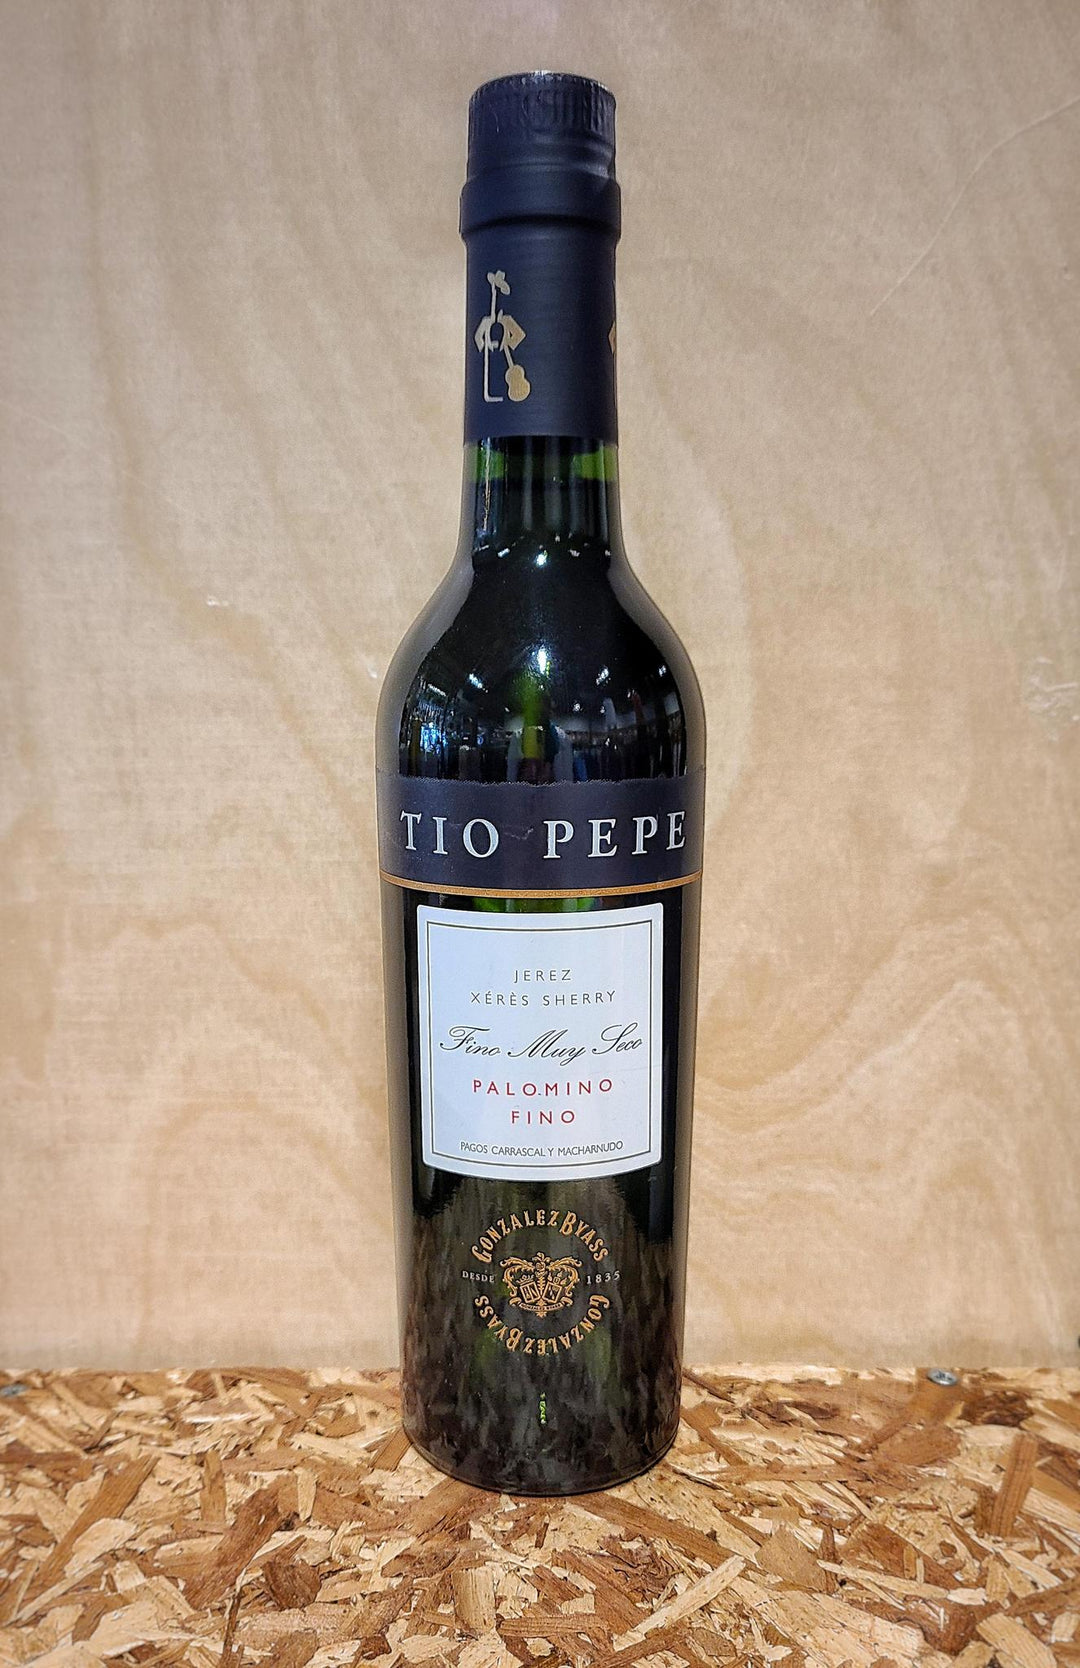 Tio Pepe Palomino Fino Sherry NV (Jerez-Xeres-Sherry, Spain)